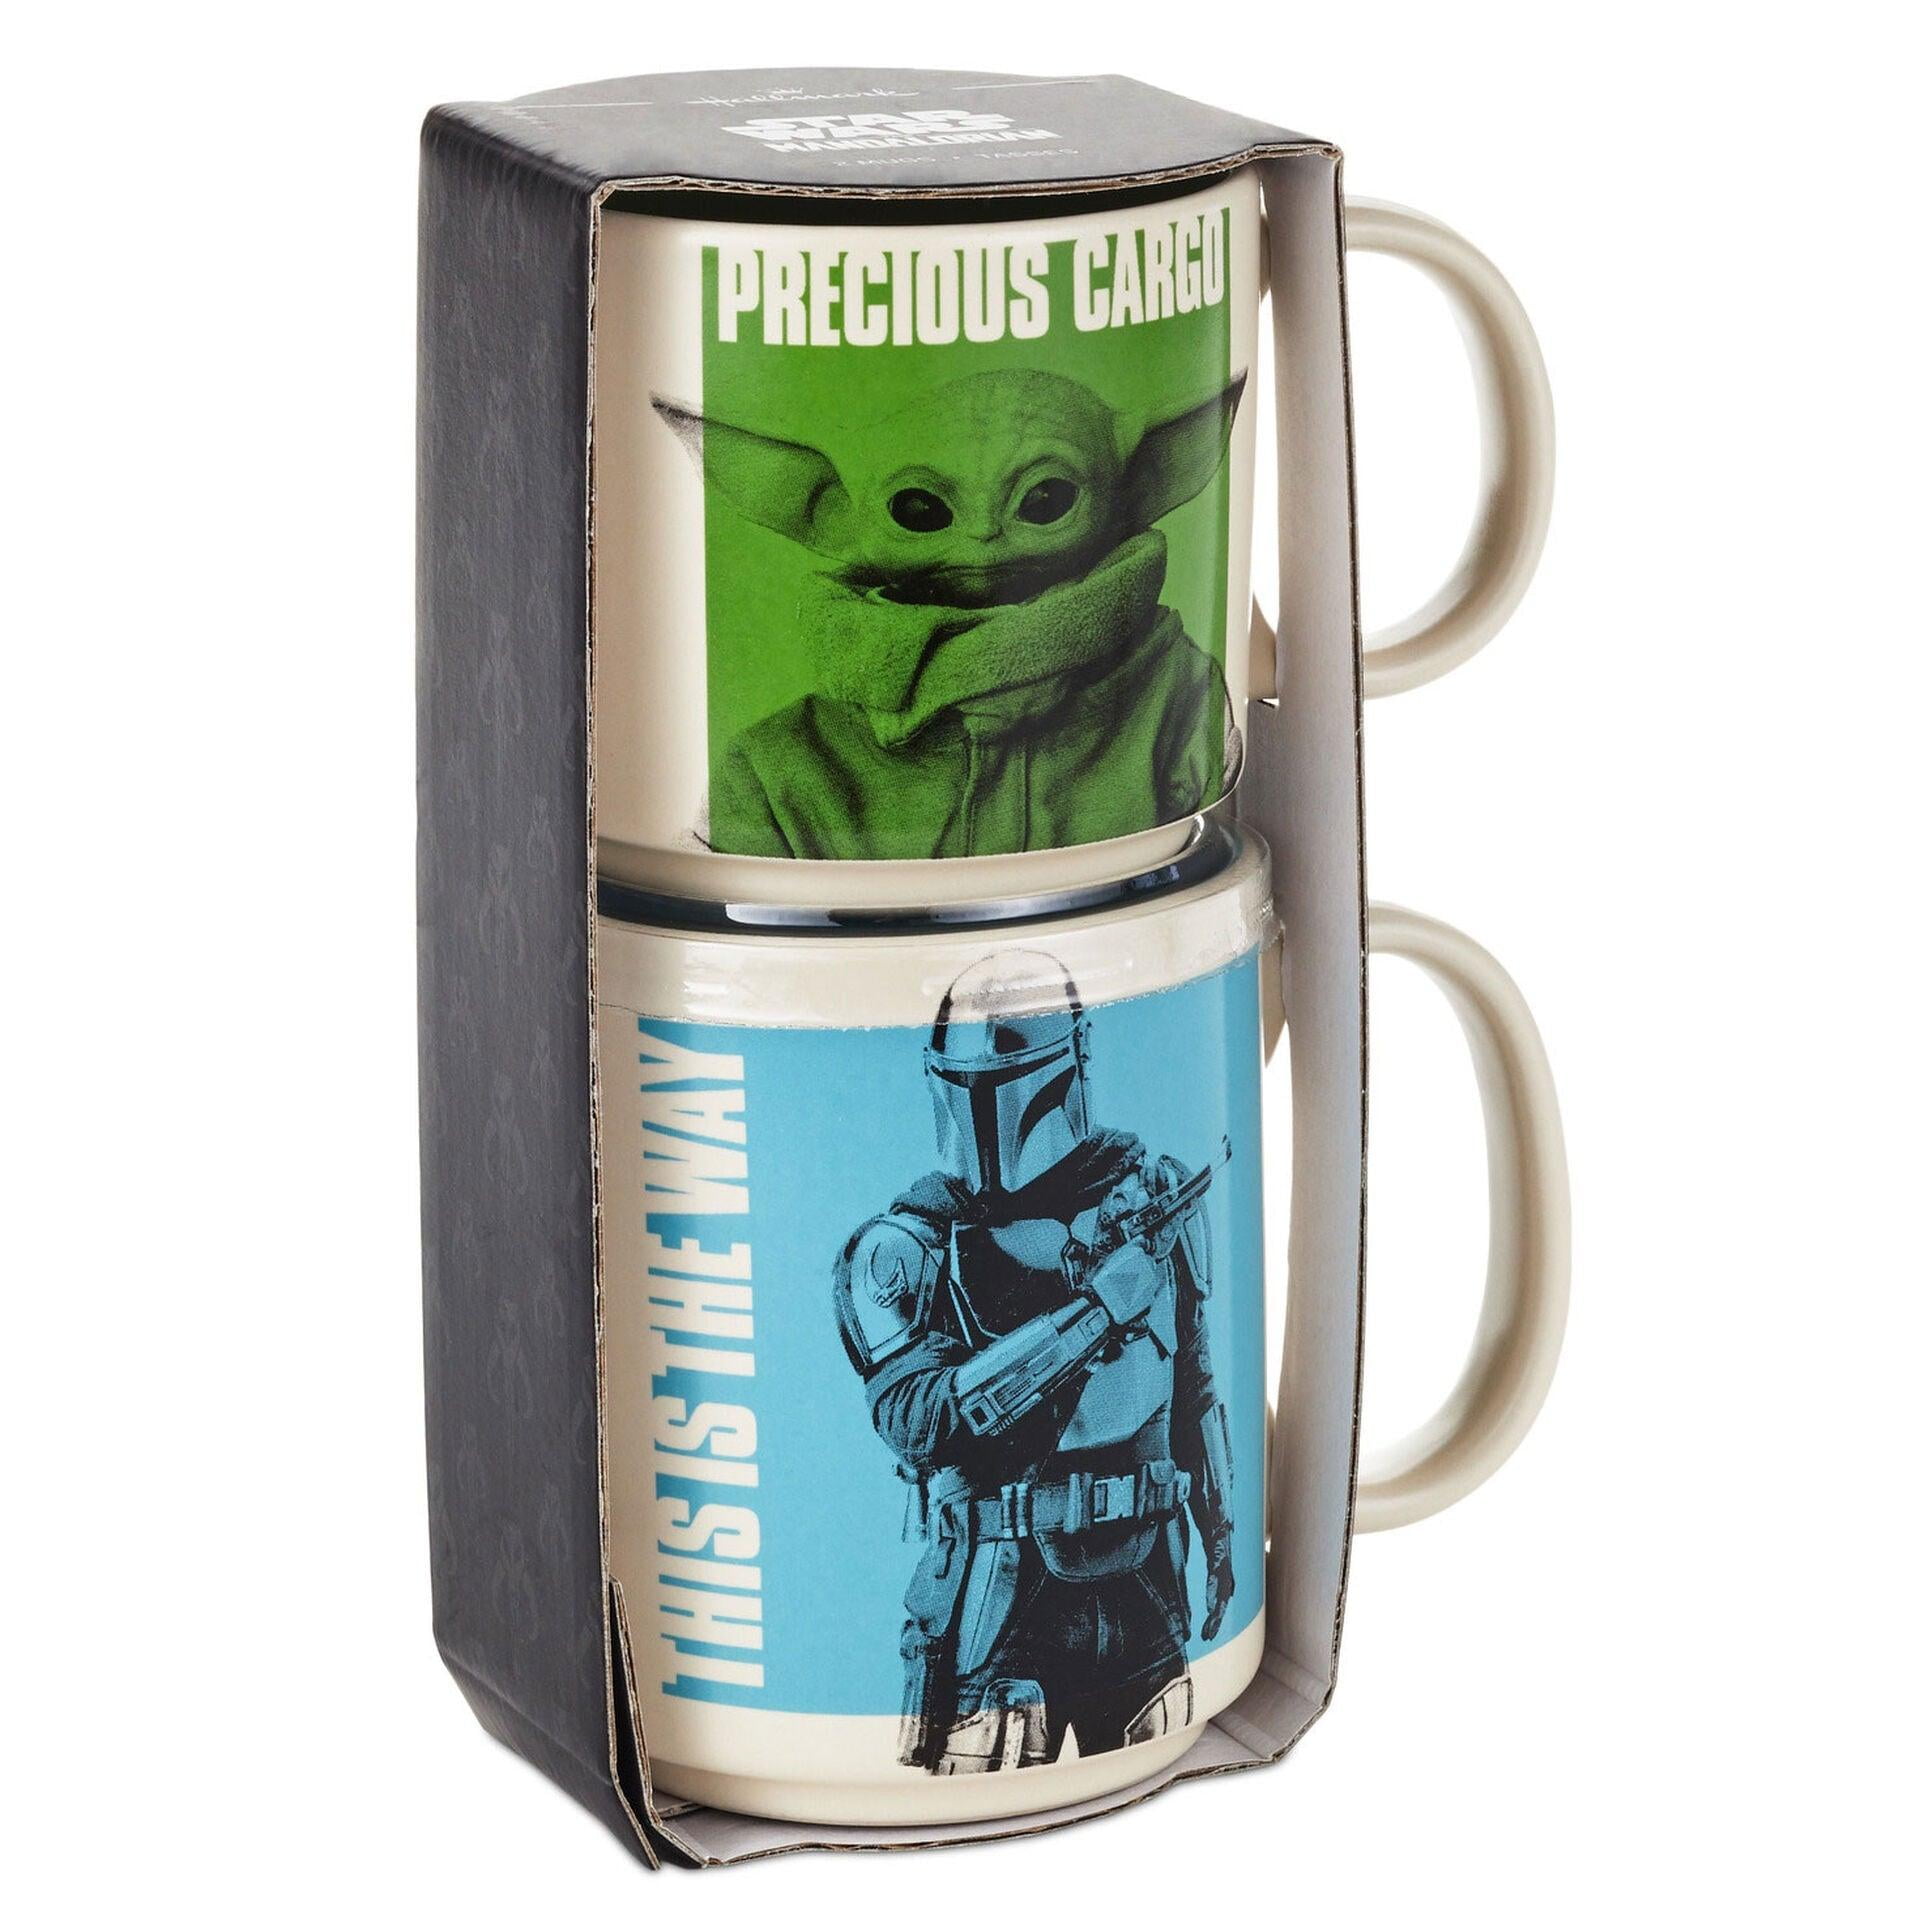 Star Wars The Mandalorian Grogu Mug Warmer Set - Uncanny Brands